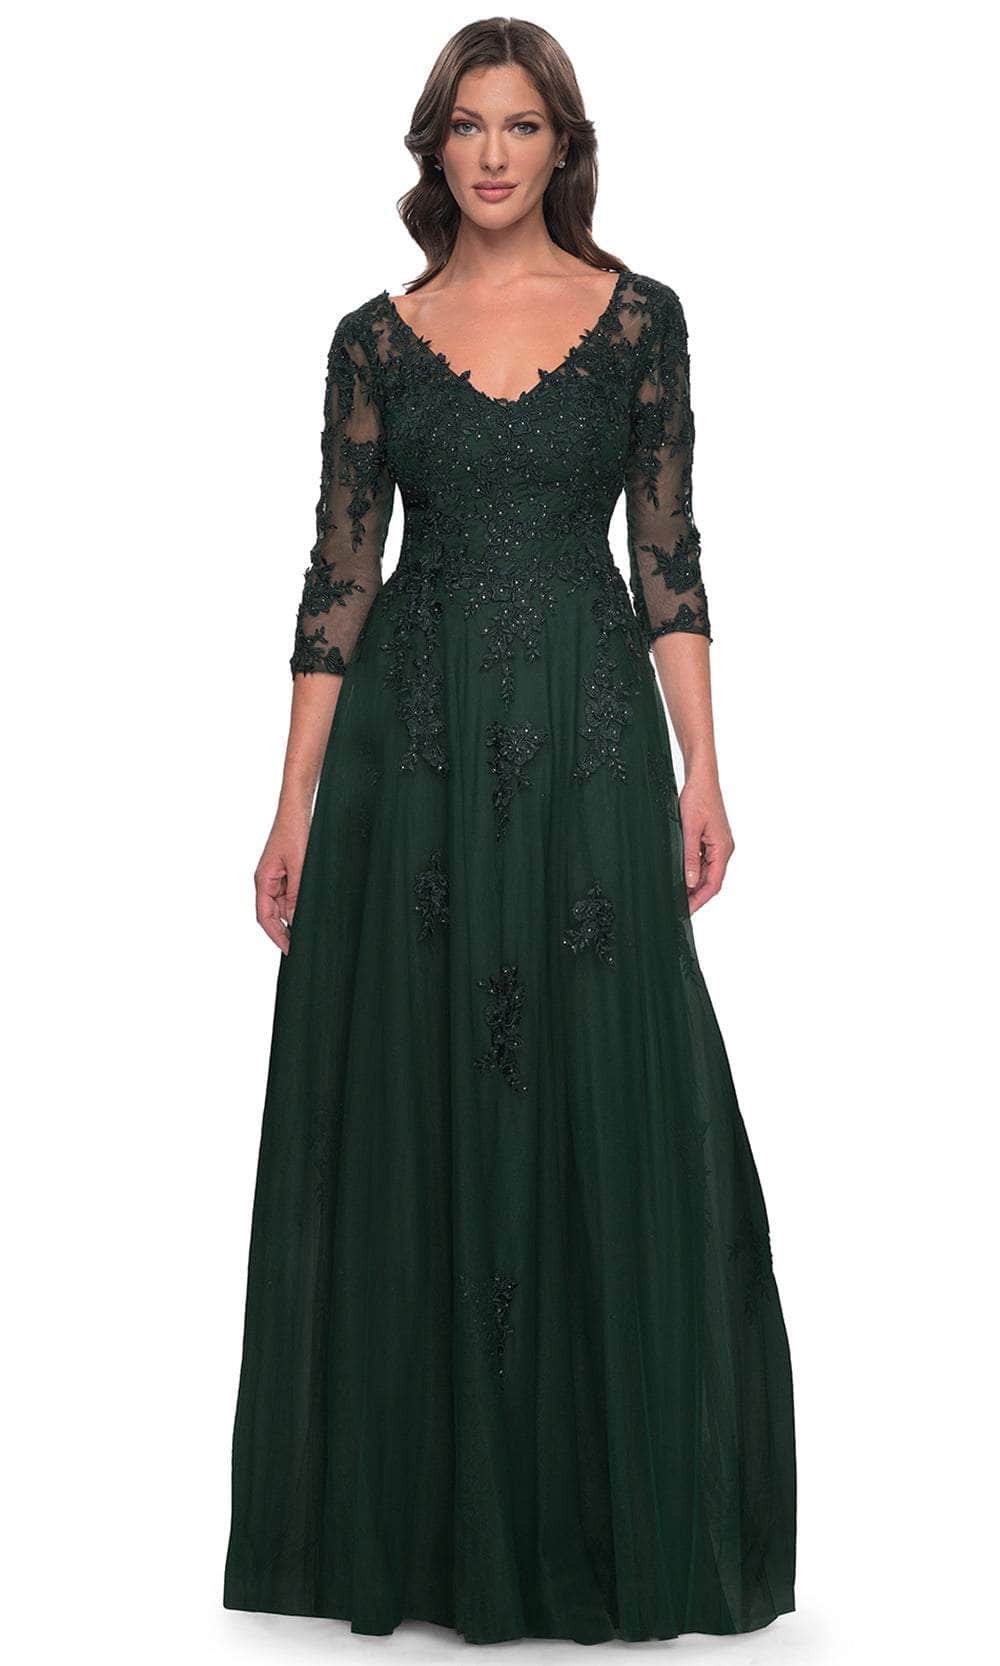 La Femme 30398 - V-Neck Lace Applique Evening Dress Mother of the Bride Dresses 4 / Dark Emerald